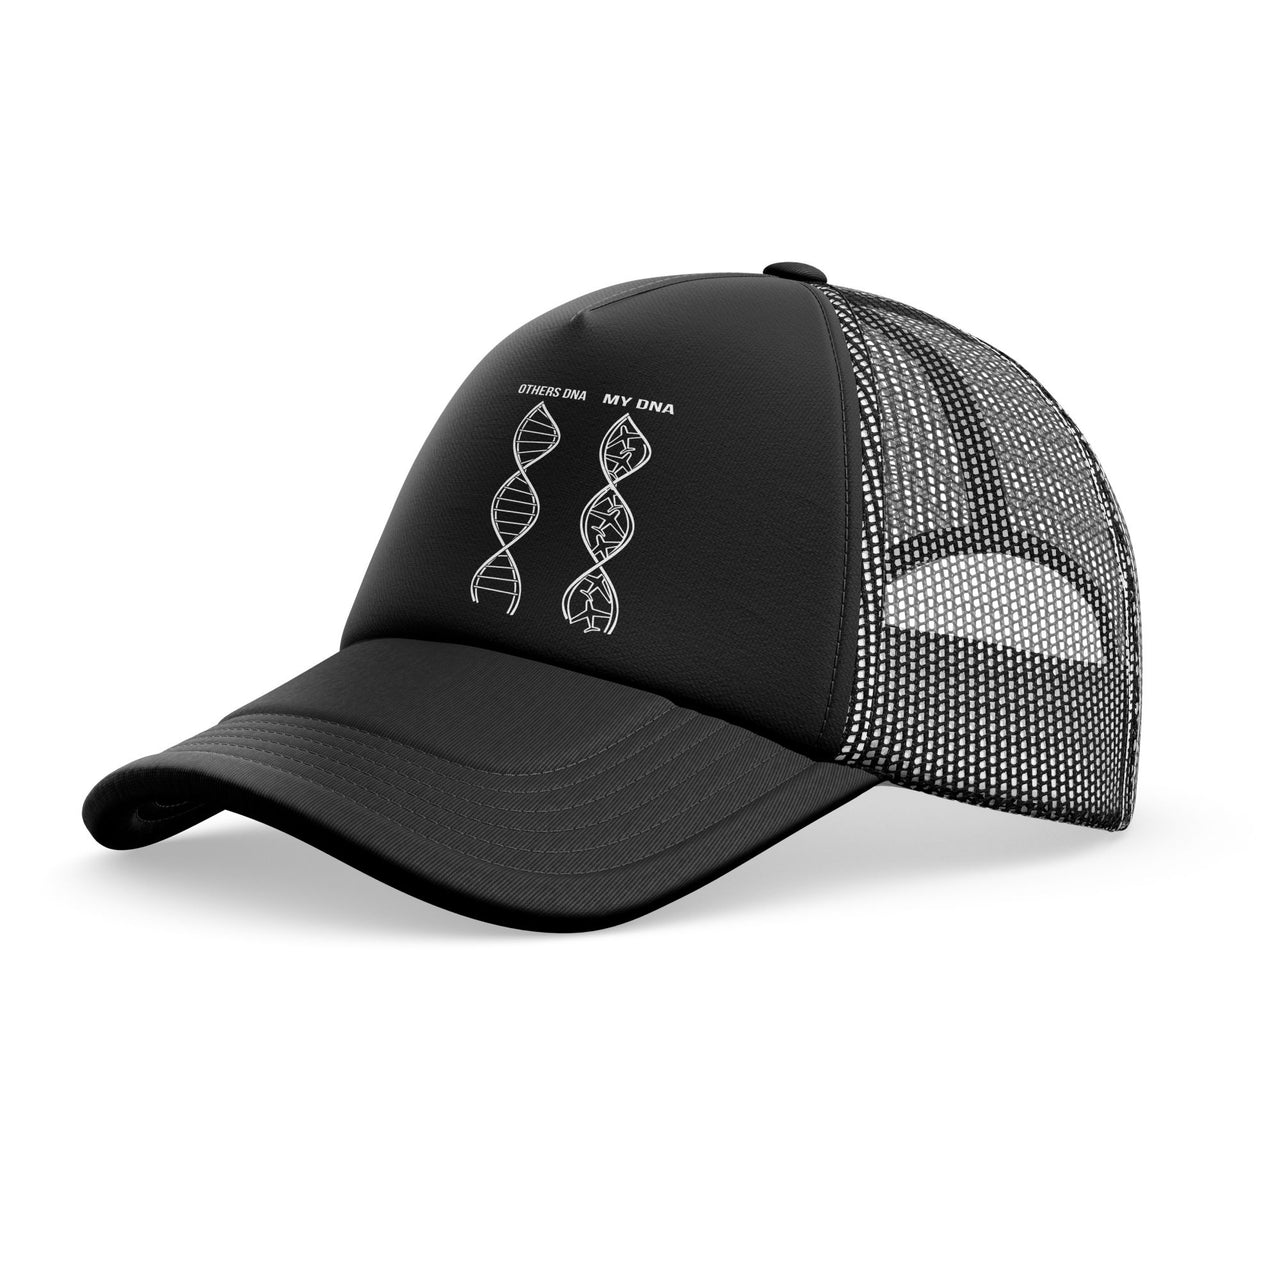 Aviation DNA Designed Trucker Caps & Hats